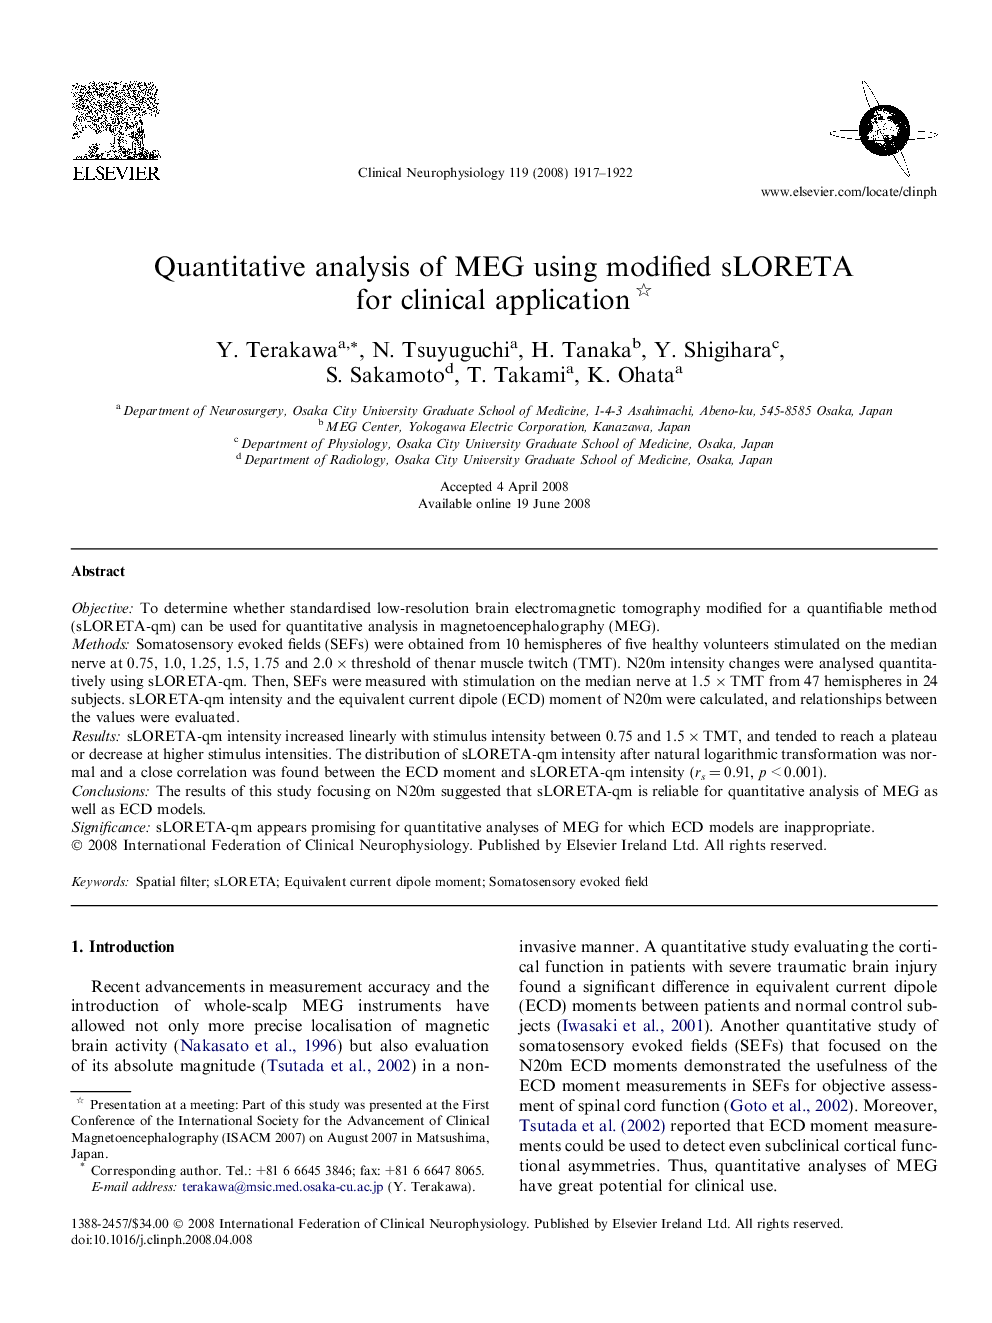 Quantitative analysis of MEG using modified sLORETA for clinical application 